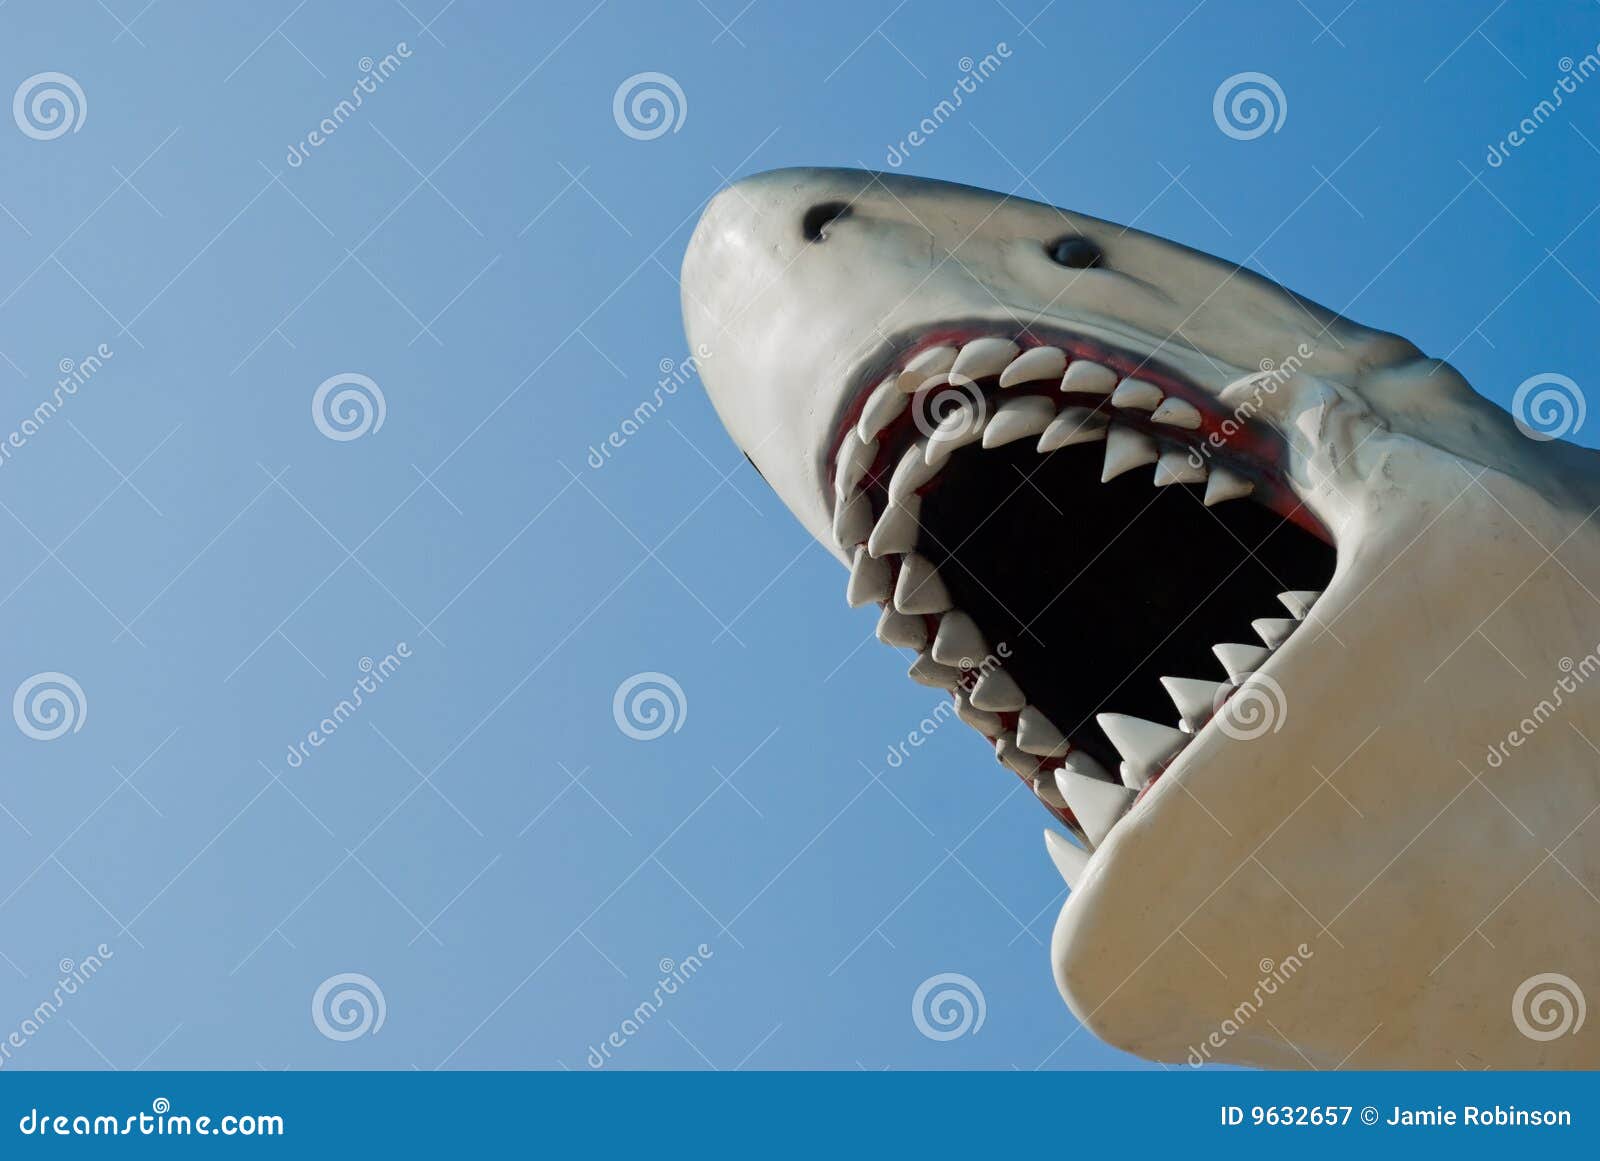 444 Shark Ai Stock Photos - Free & Royalty-Free Stock Photos from Dreamstime